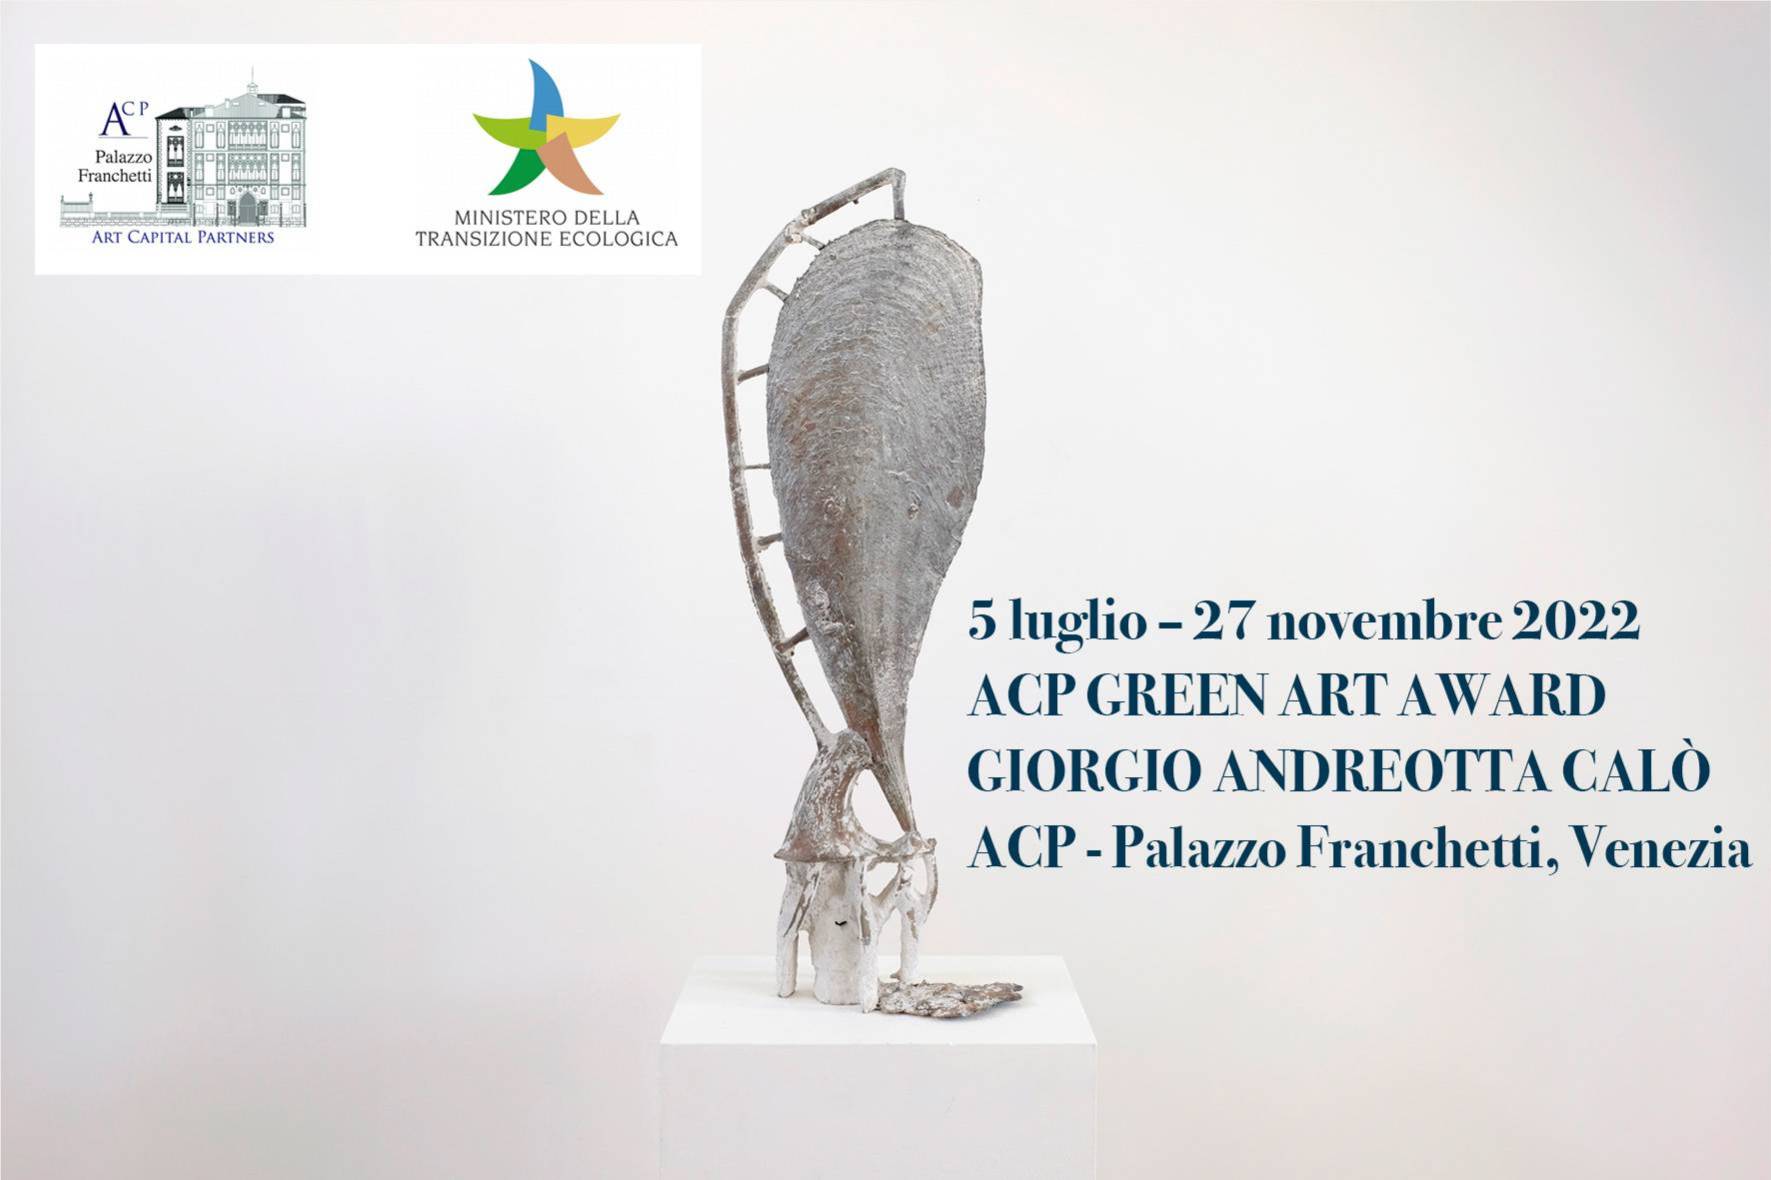 ACP GREEN ART AWARD GIORGIO ANDREOTTA CALÒ 